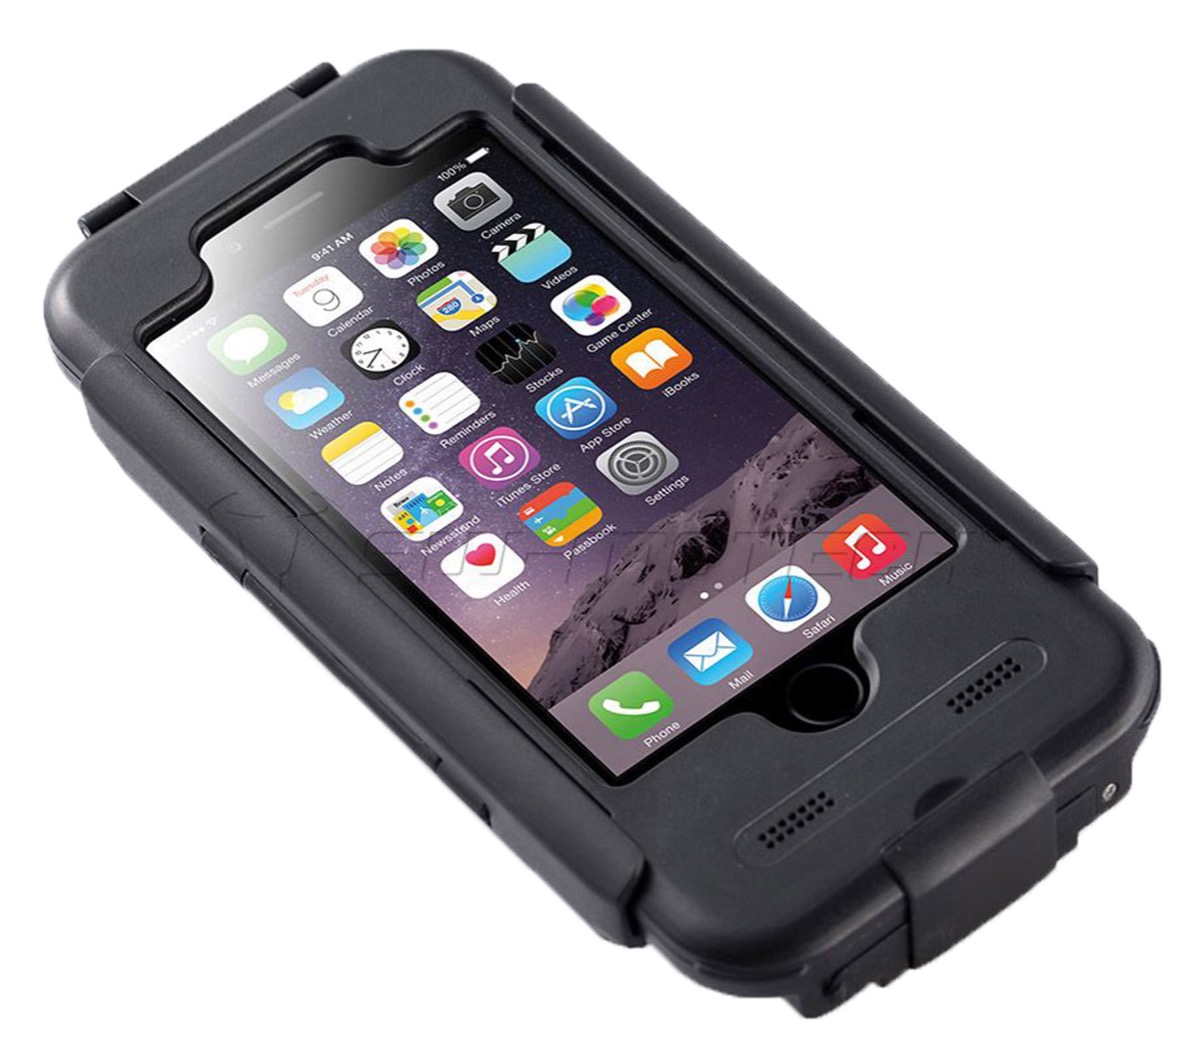 SW-MOTECH Hardcase for iPhone 5 / 5s, SE. Splashproof. Black. For GPS Mount